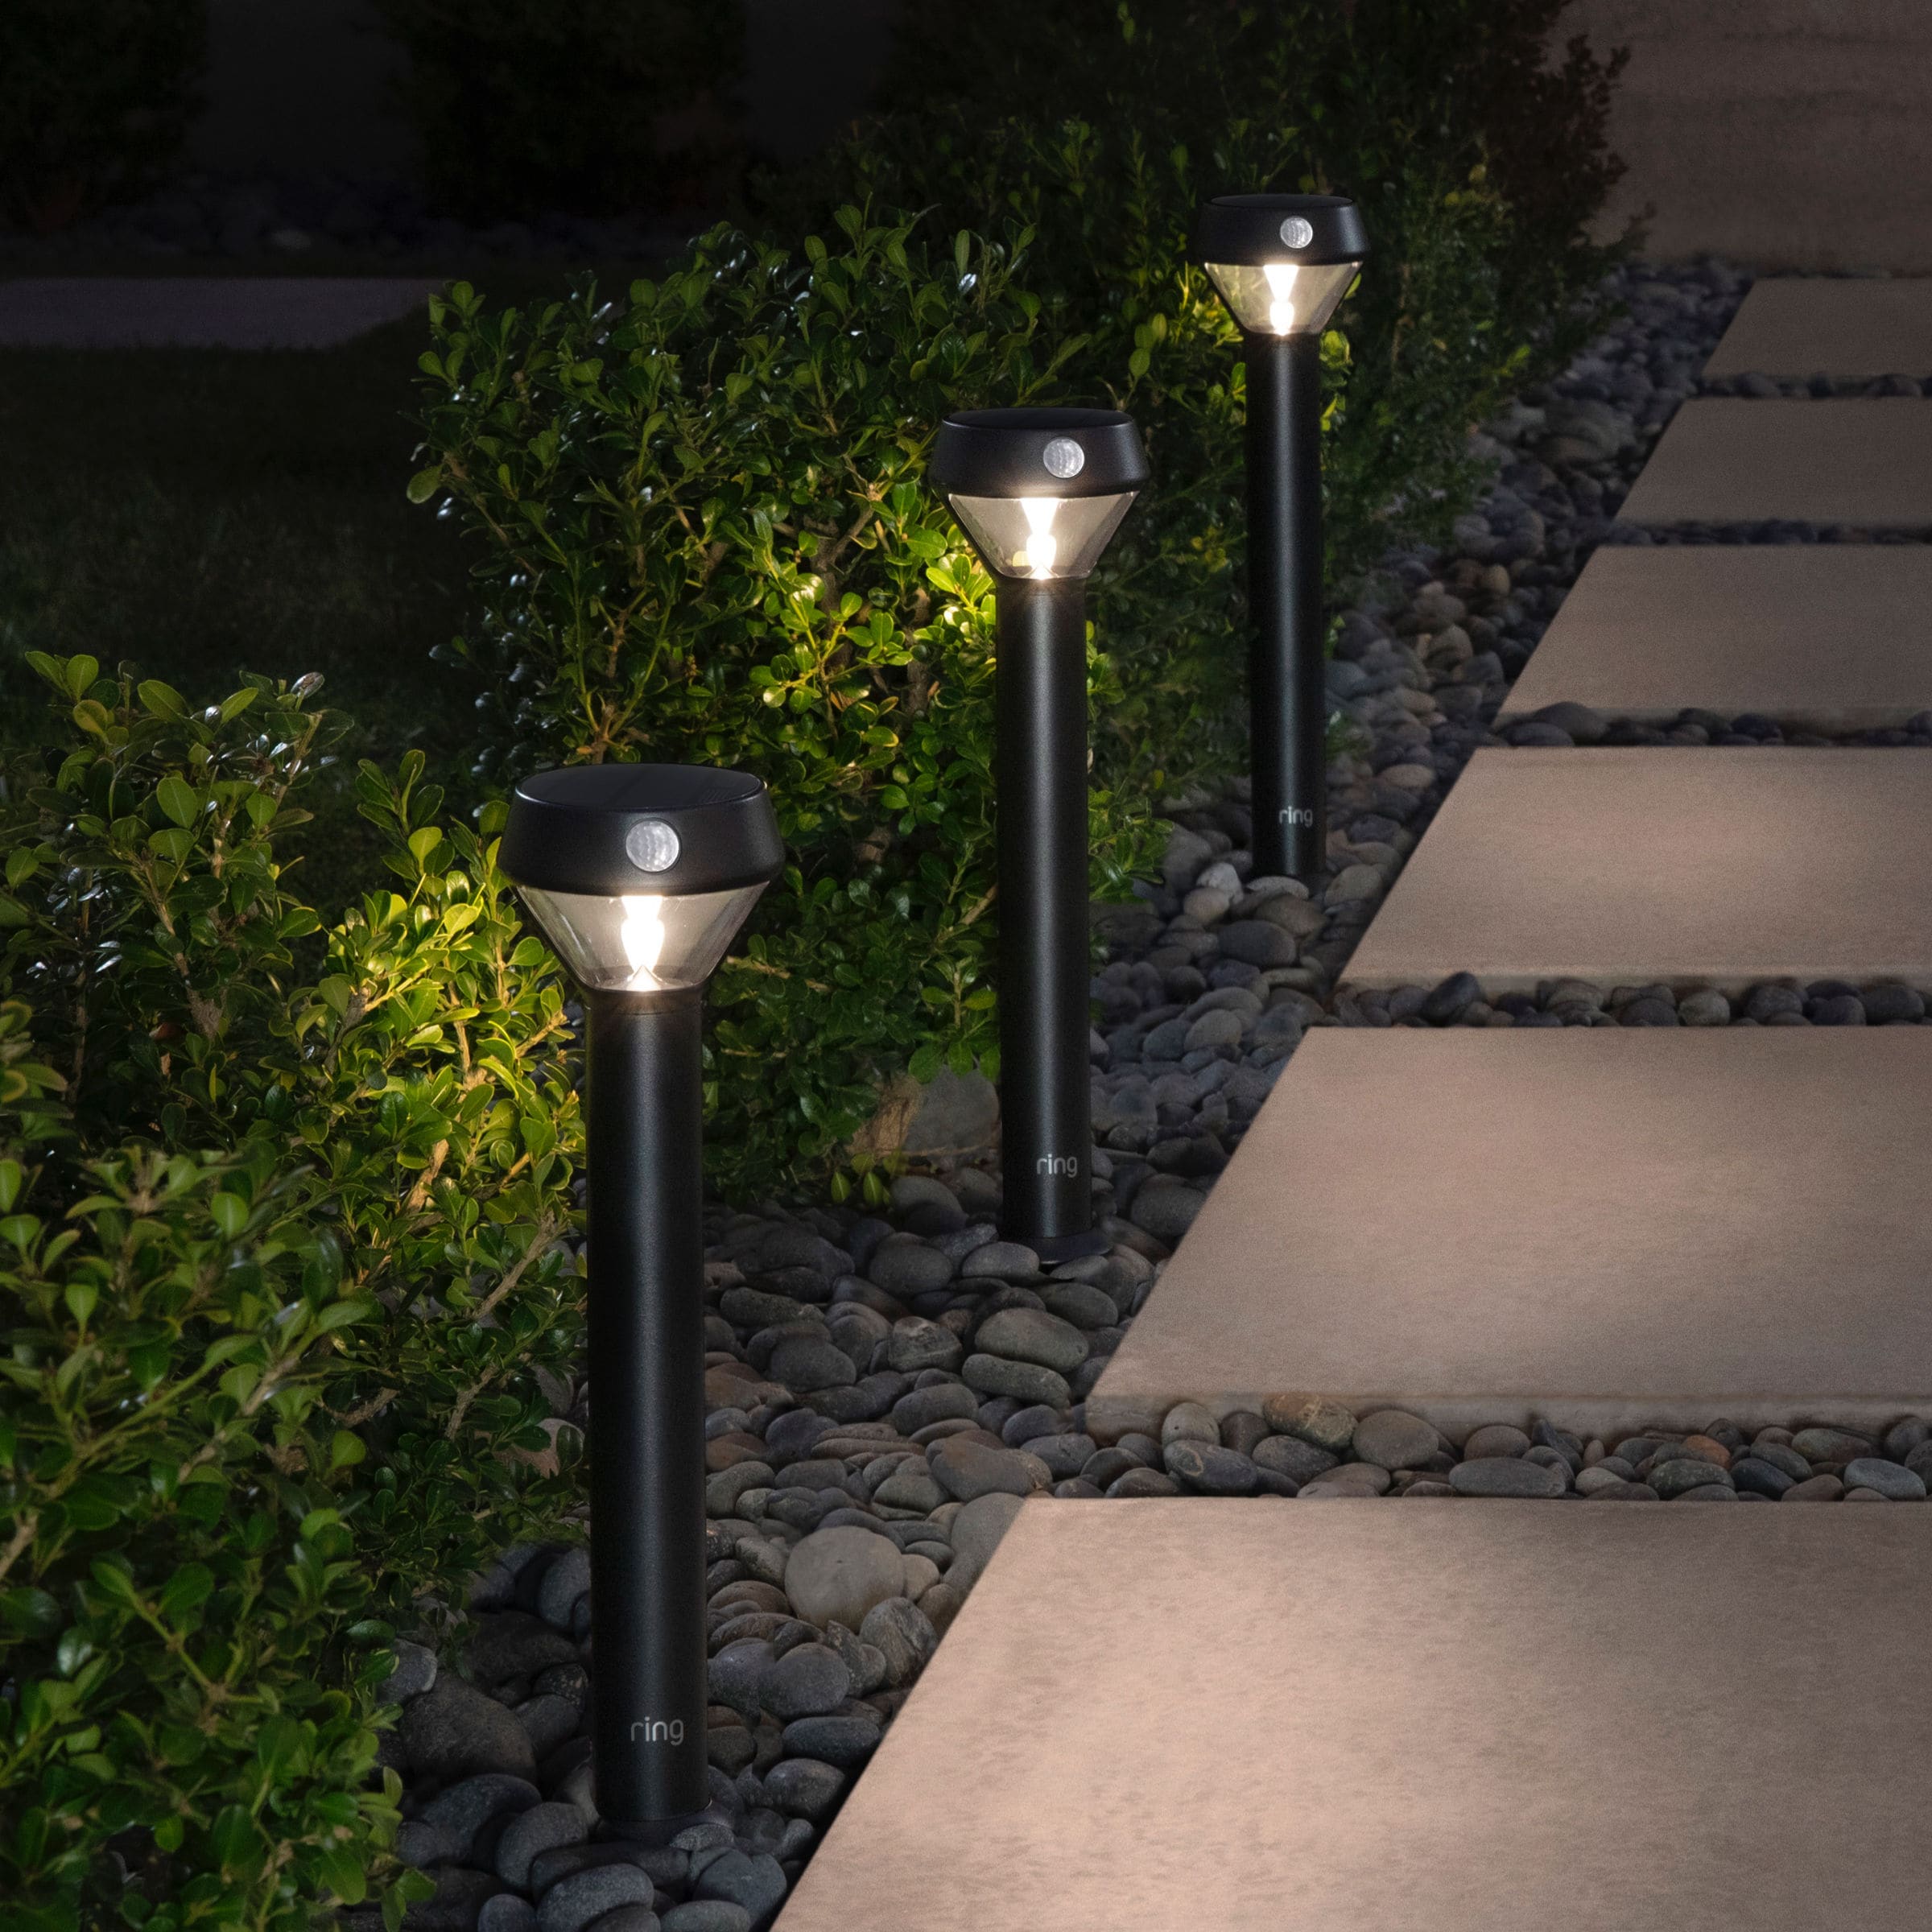 Ring Smart Lighting Pathlight starter kit review: Security